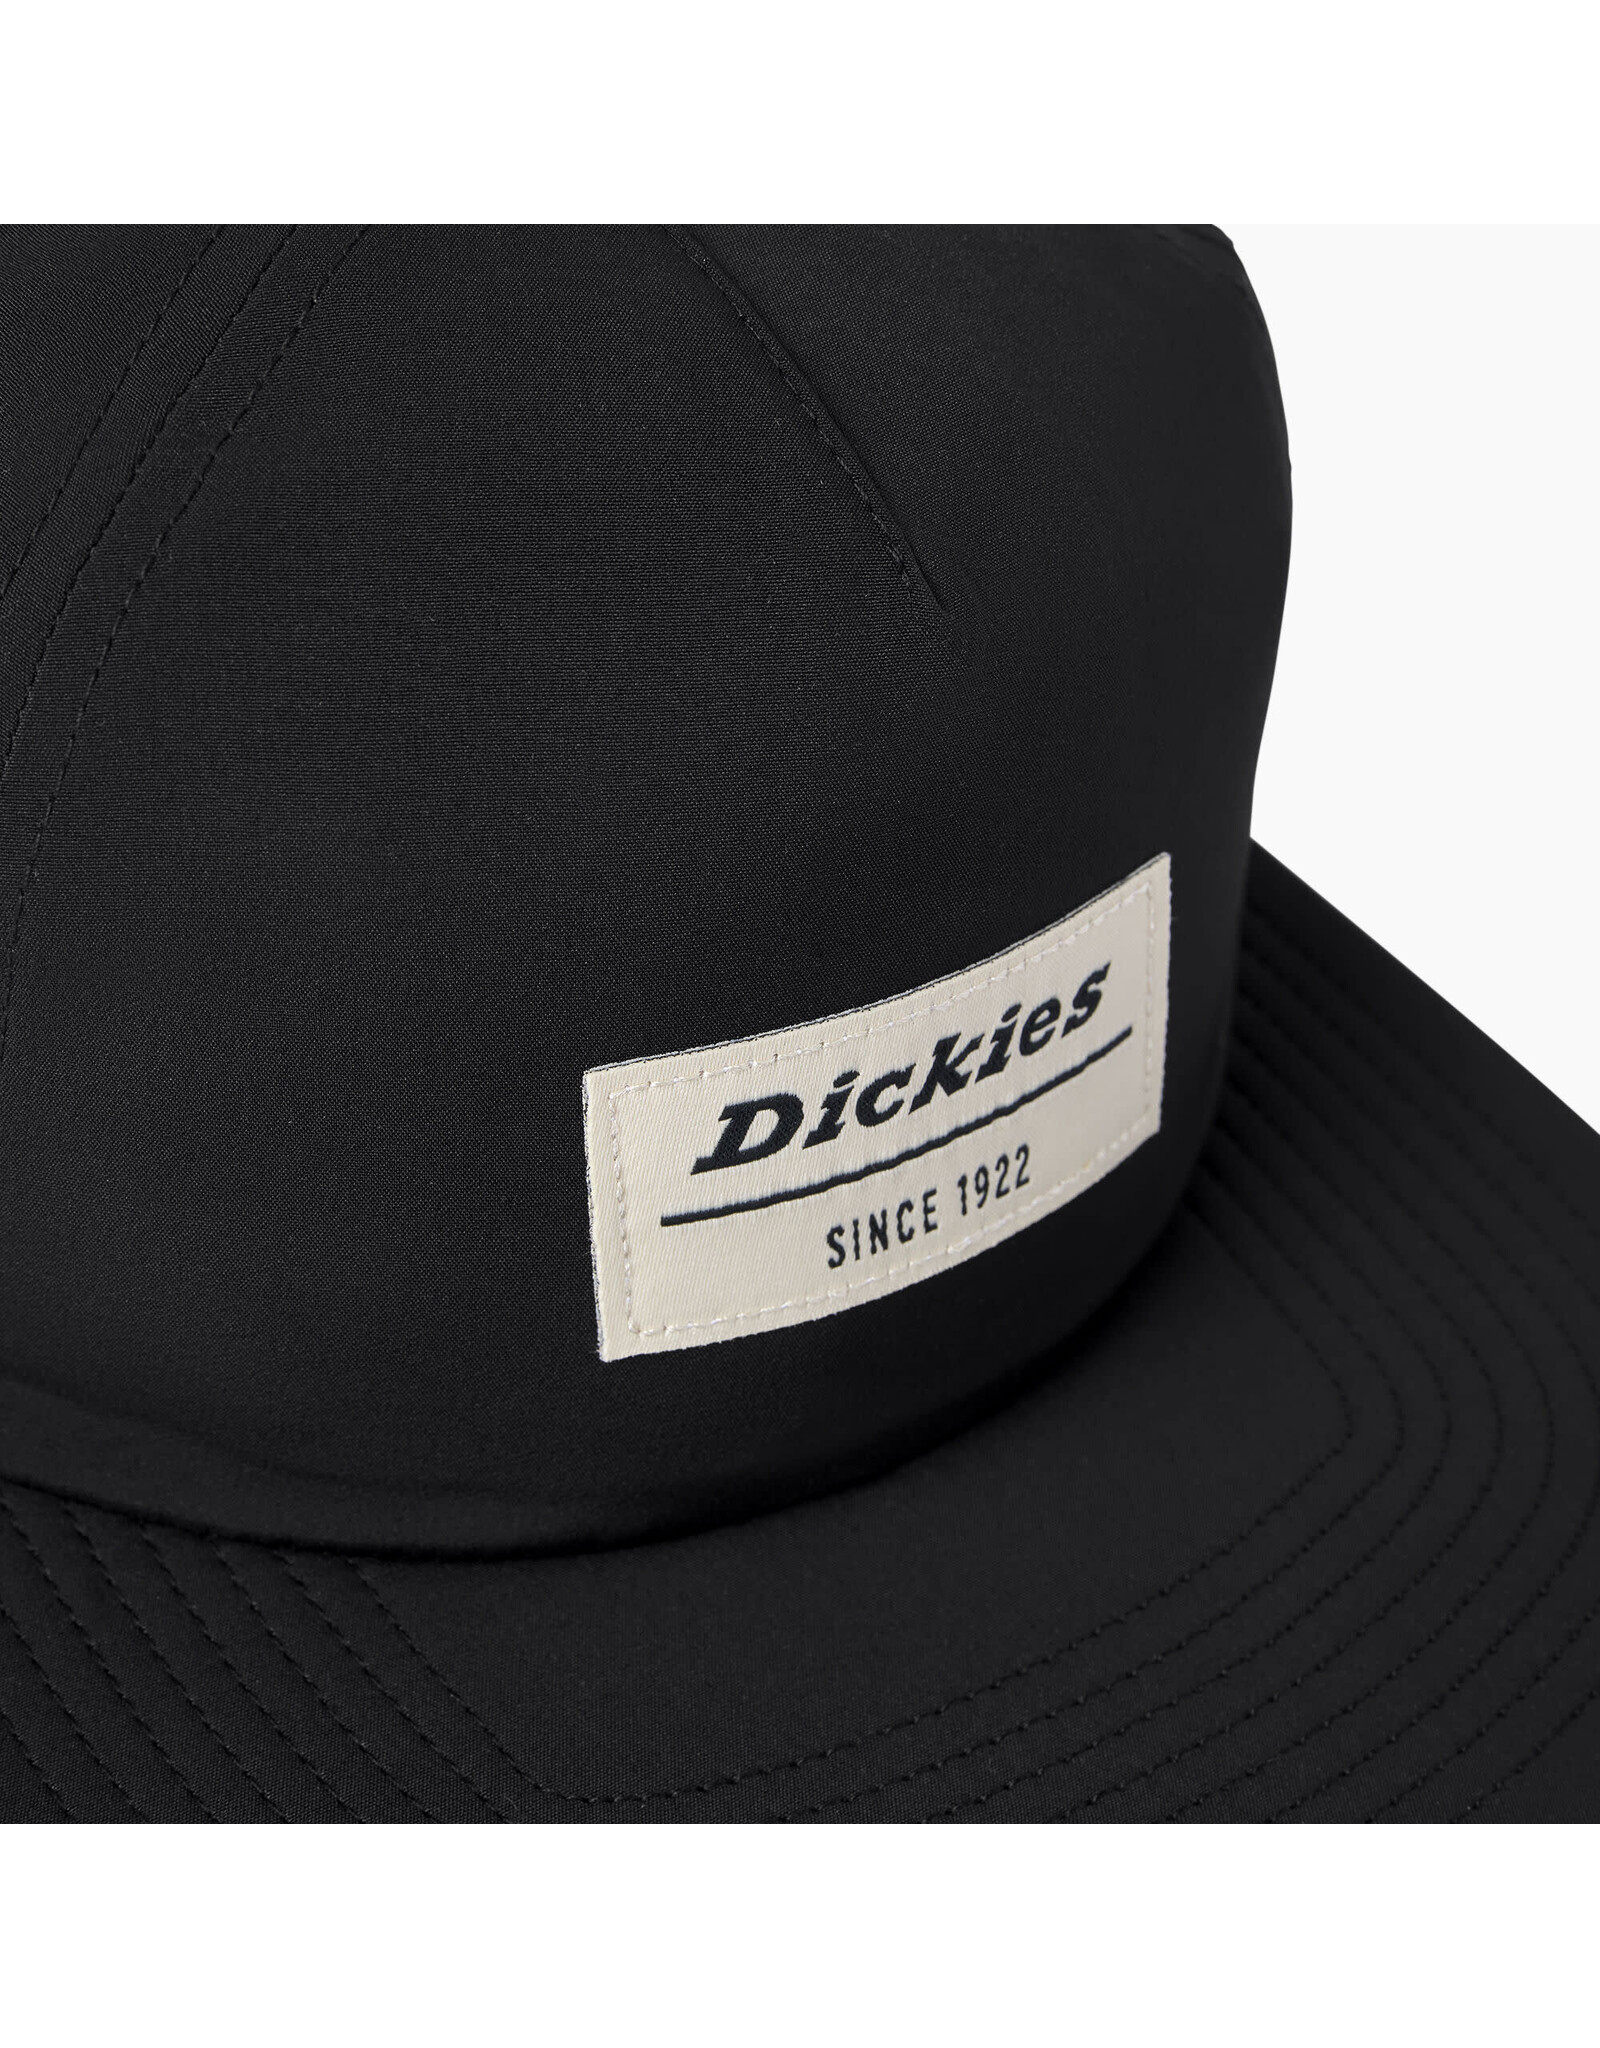 DICKIES Low Pro Athletic Cap Black - WHR101BKX